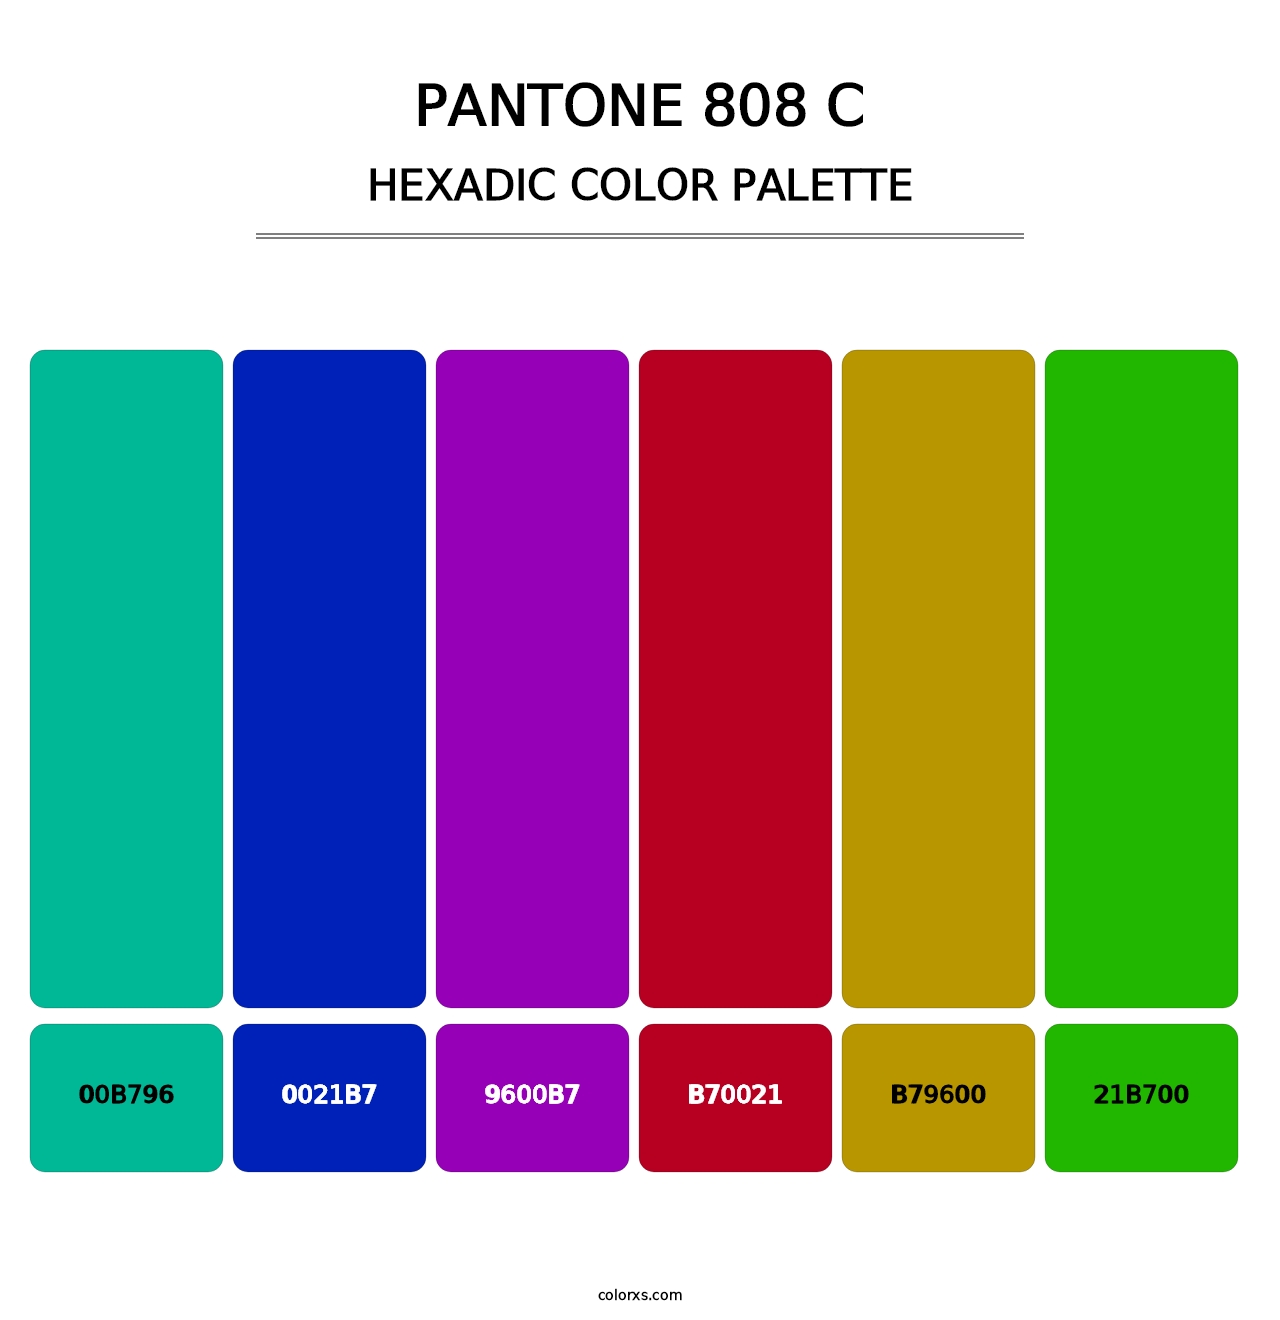 PANTONE 808 C - Hexadic Color Palette